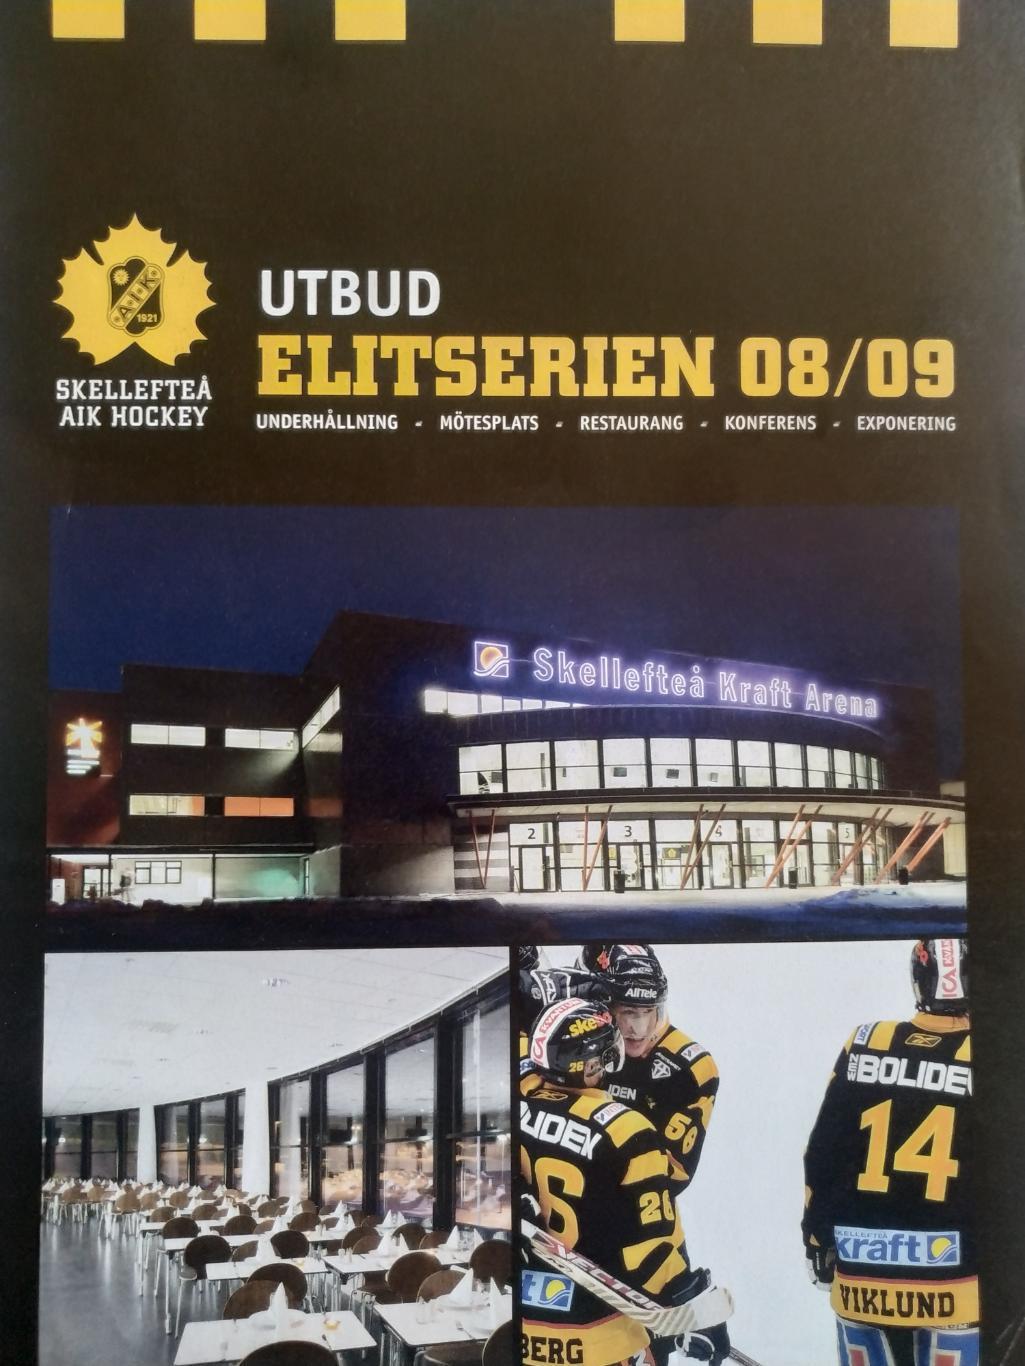 ХОККЕЙ ПРОГРАММА МАТЧА НХЛ NHL 2008-09 SKELLEFTEA PROGRAM STADIUM SWEDISH